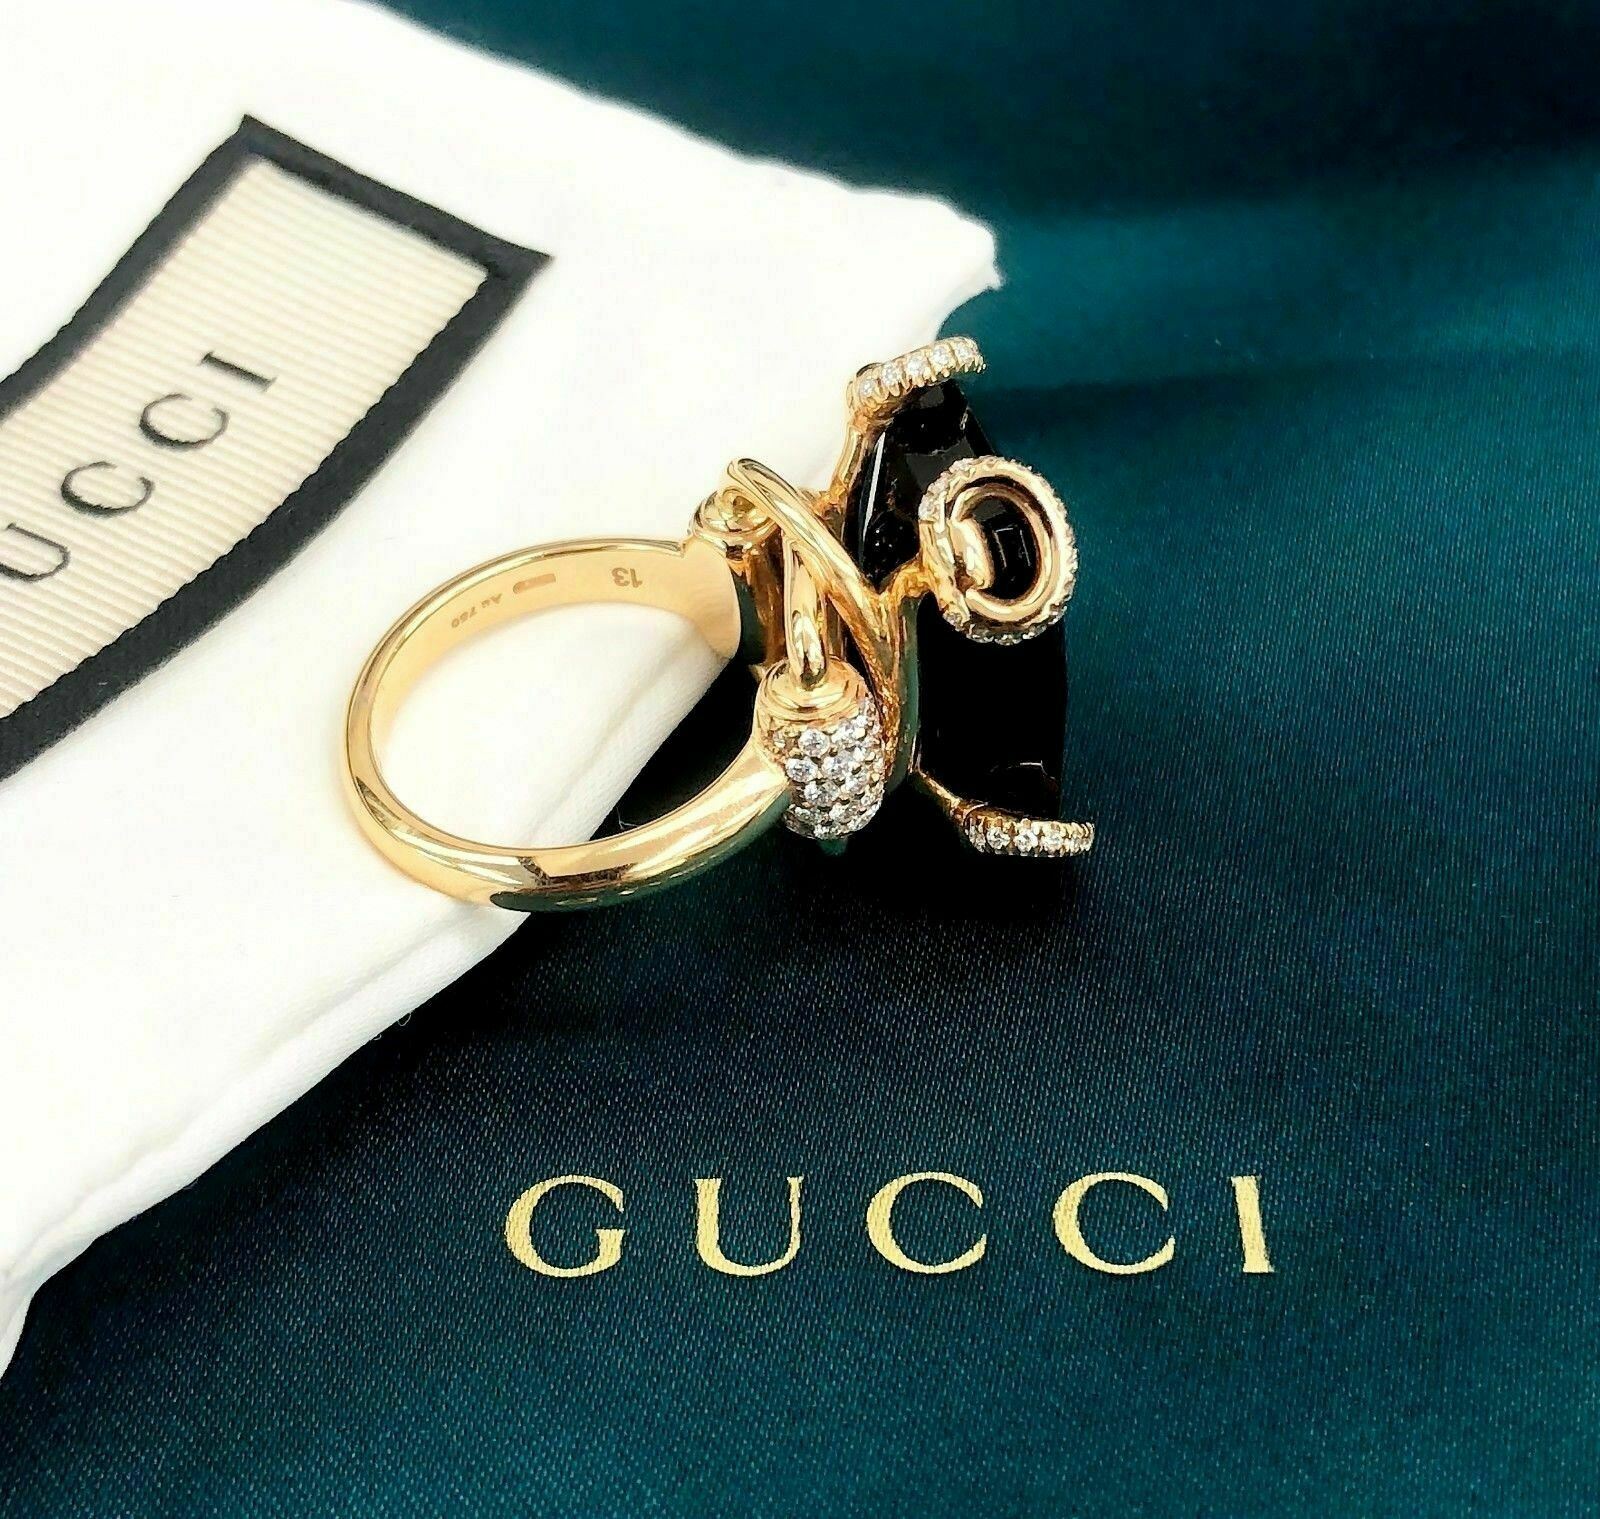 Gucci Italy 18K White Gold SOLID PRINCESS CUT Diamond 7mm Band